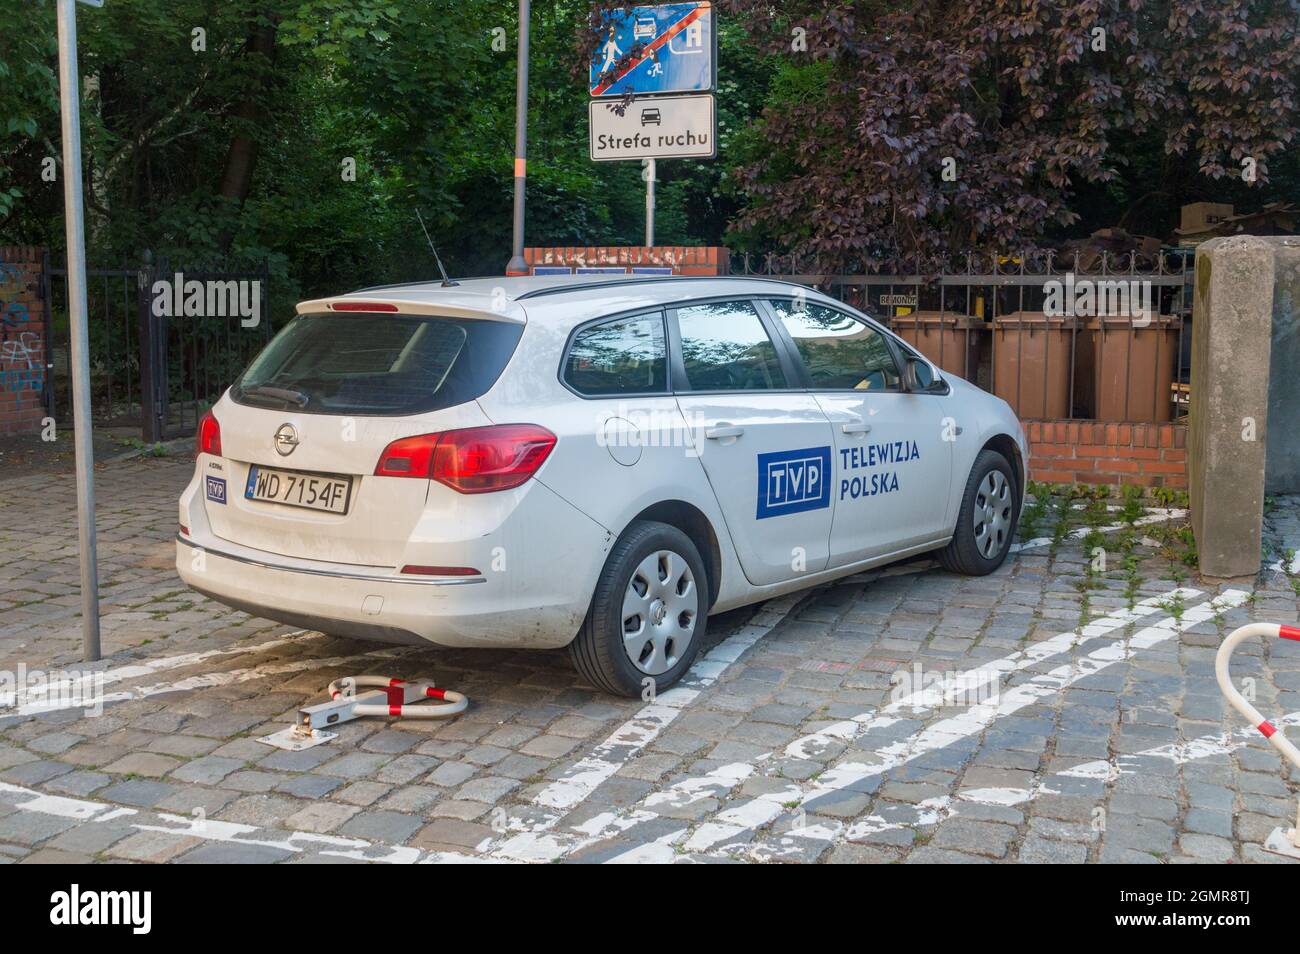 Opole, Poland - June 4, 2021: Car of TVP Polish public television. Stock Photo